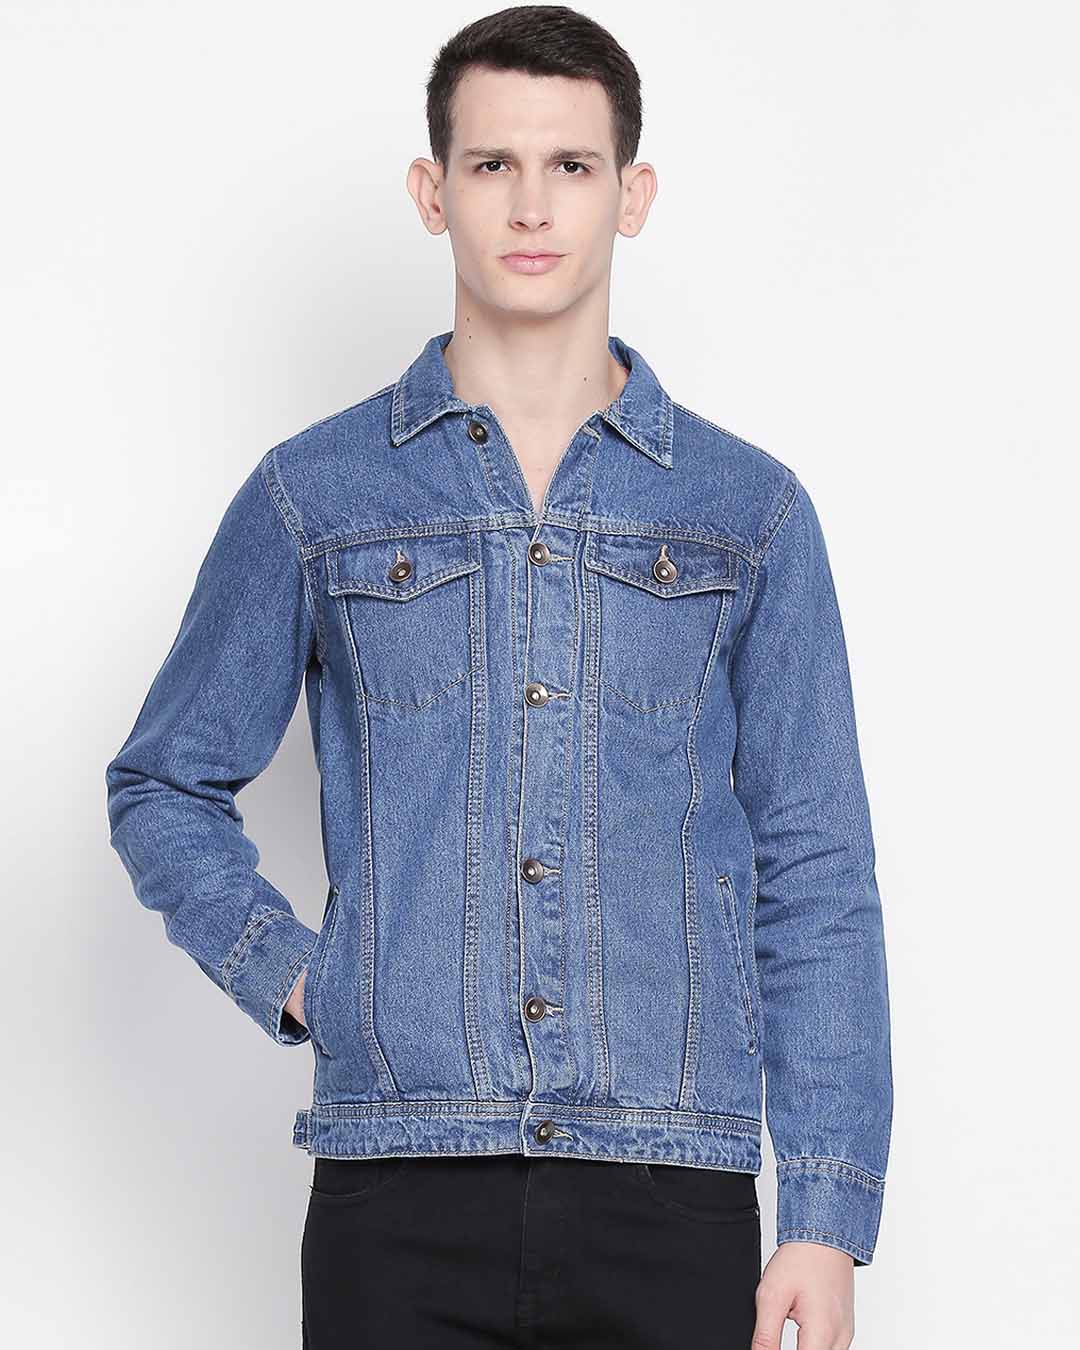 Buy HIGH STAR Clothing Men's Regular Fit Cotton Long Sleeves Denim Jacket  (Blue1, L) at Amazon.in